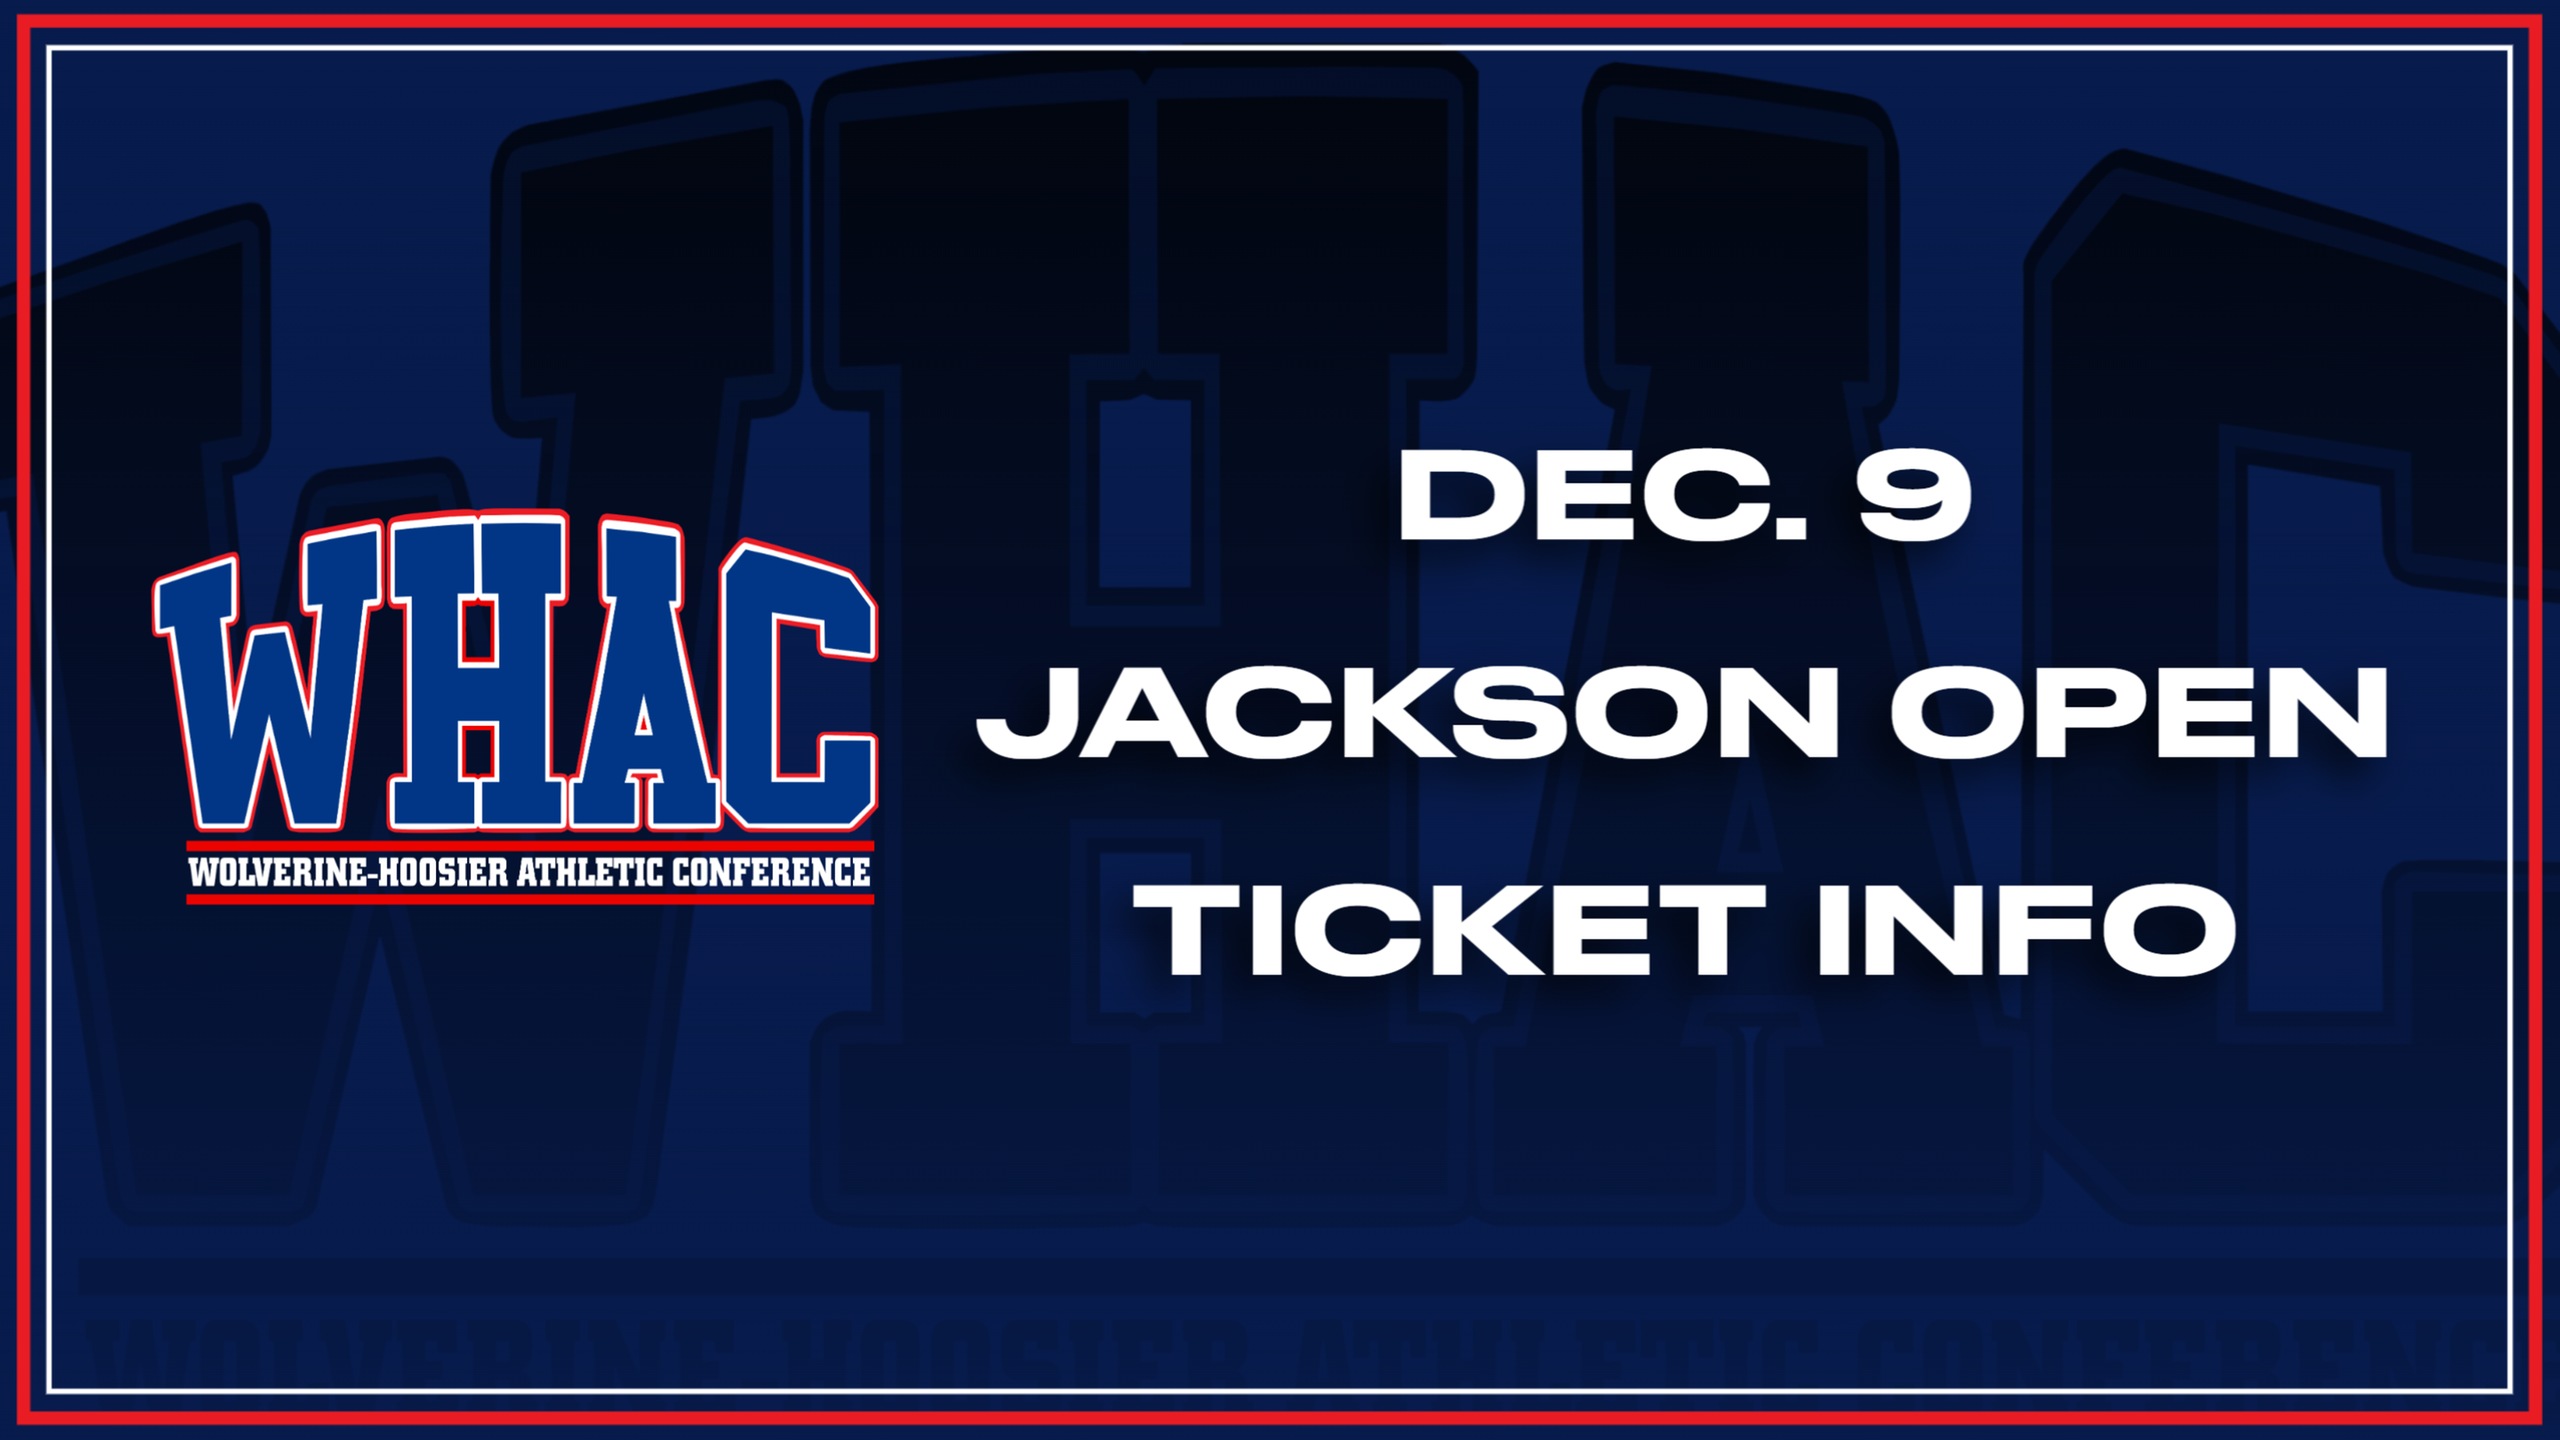 Ticket info for Dec. 9 WHAC Jackson Open